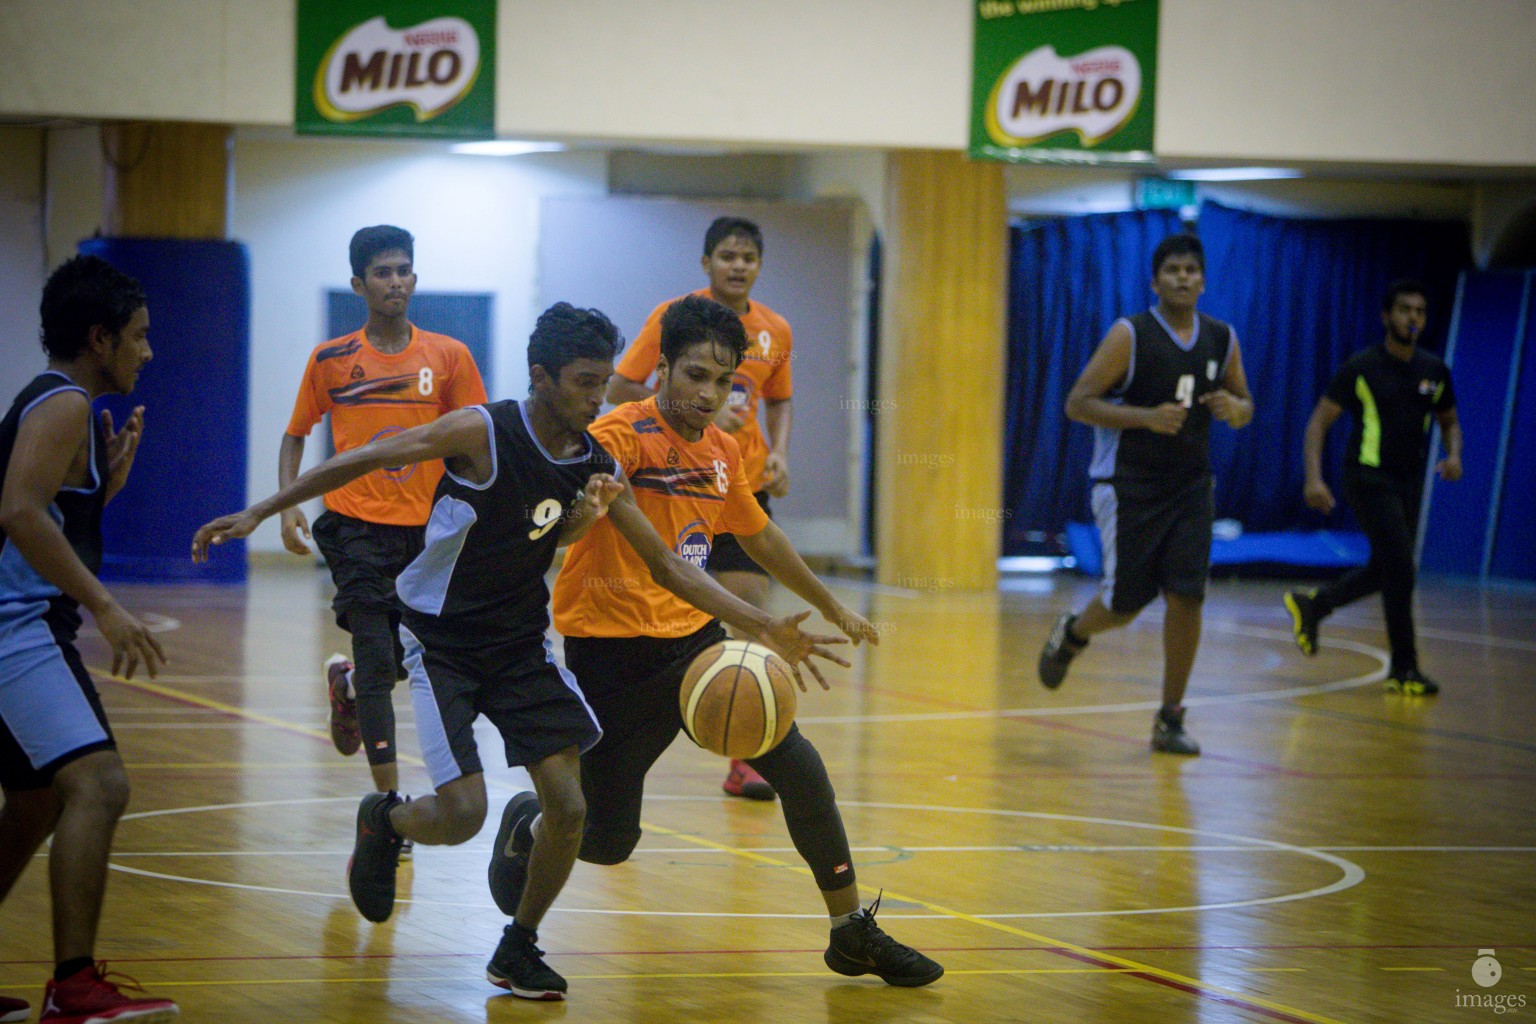 MILO Interschool Basketball Tournament 2018 (02nd April 2018)